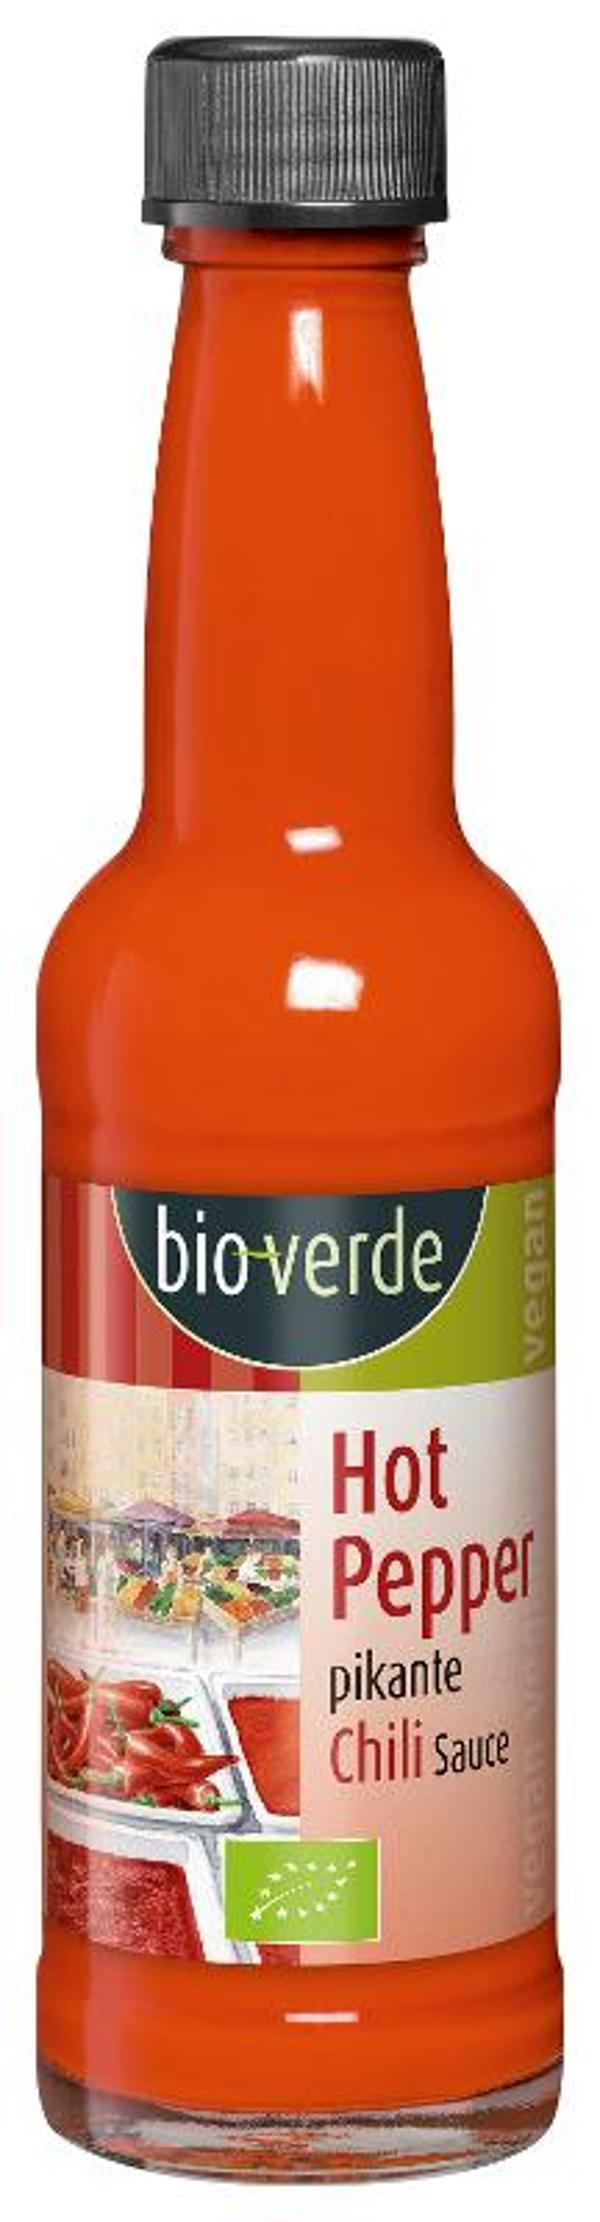 Produktfoto zu Bio Verde Hot Pepper Sauce - 100ml